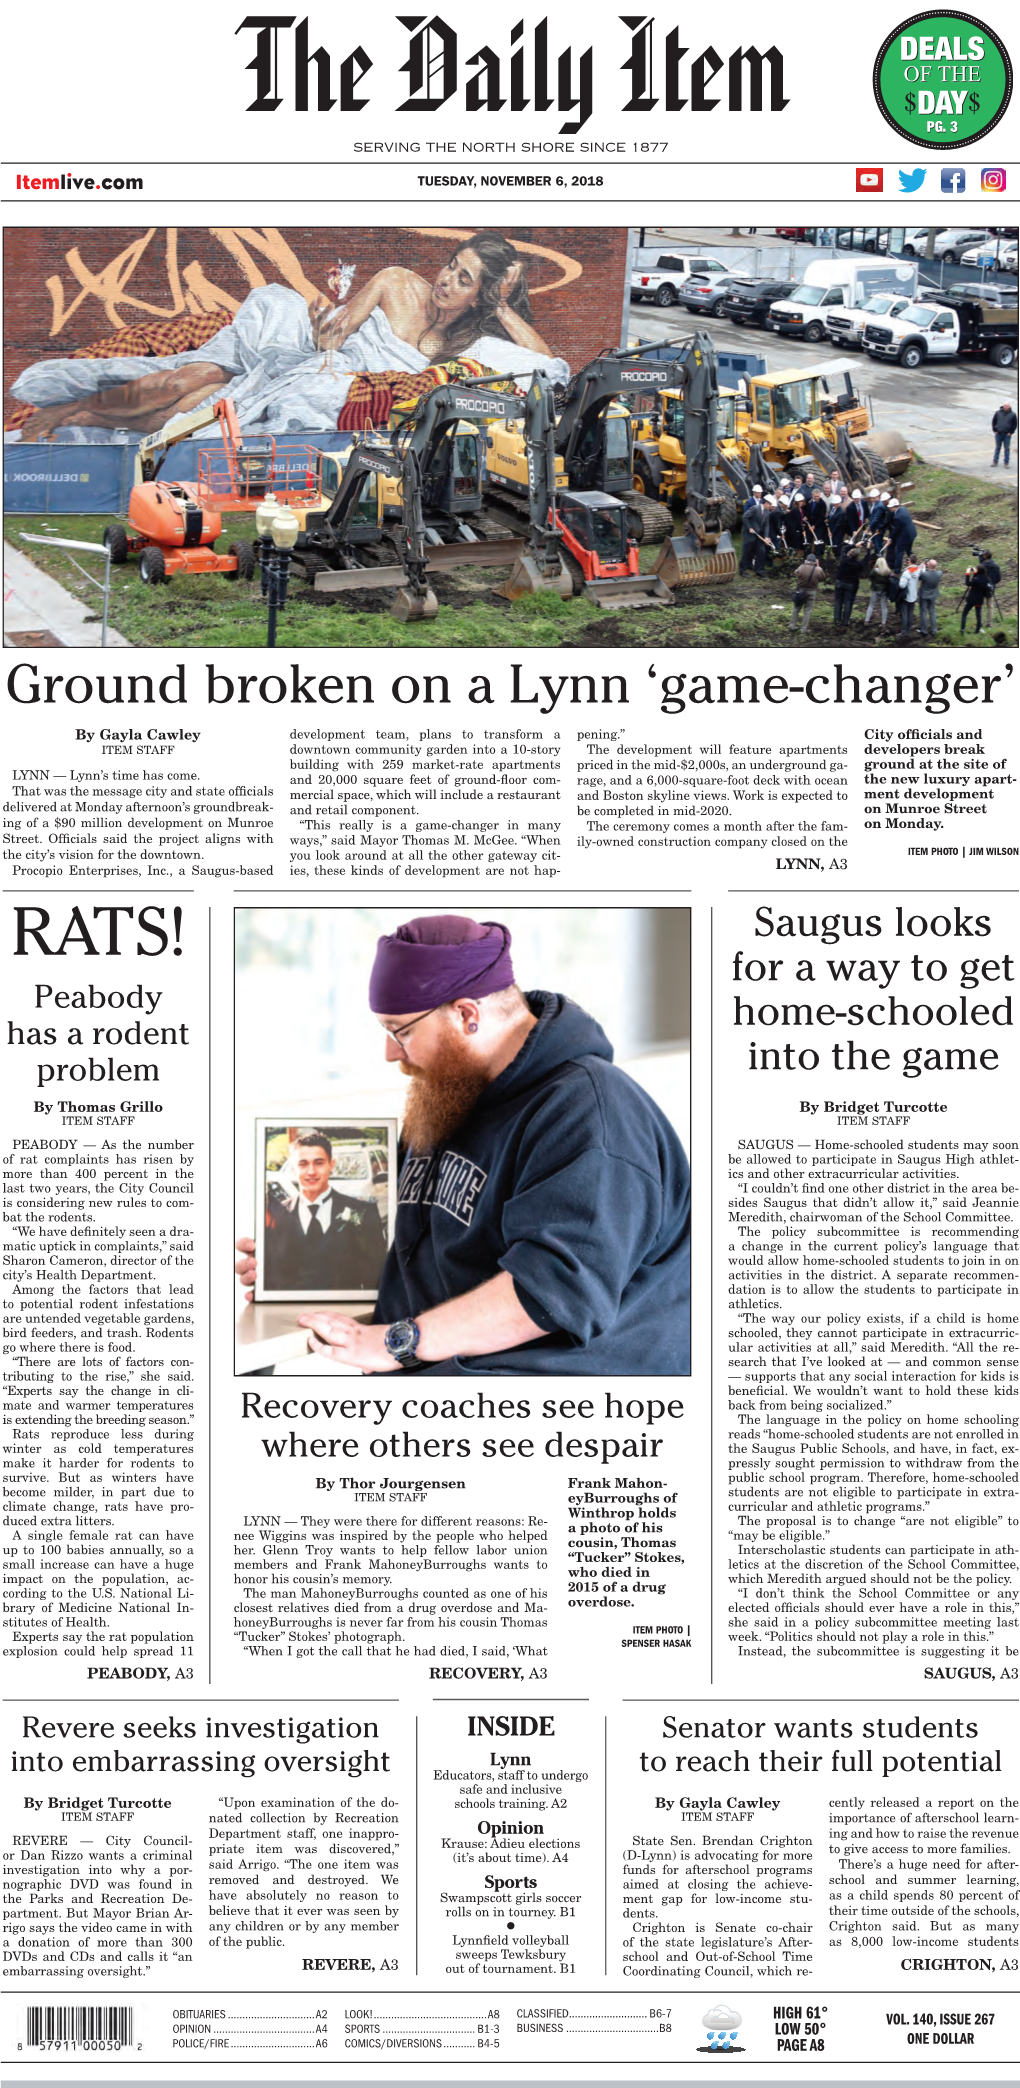 Ground Broken on a Lynn 'Game-Changer'